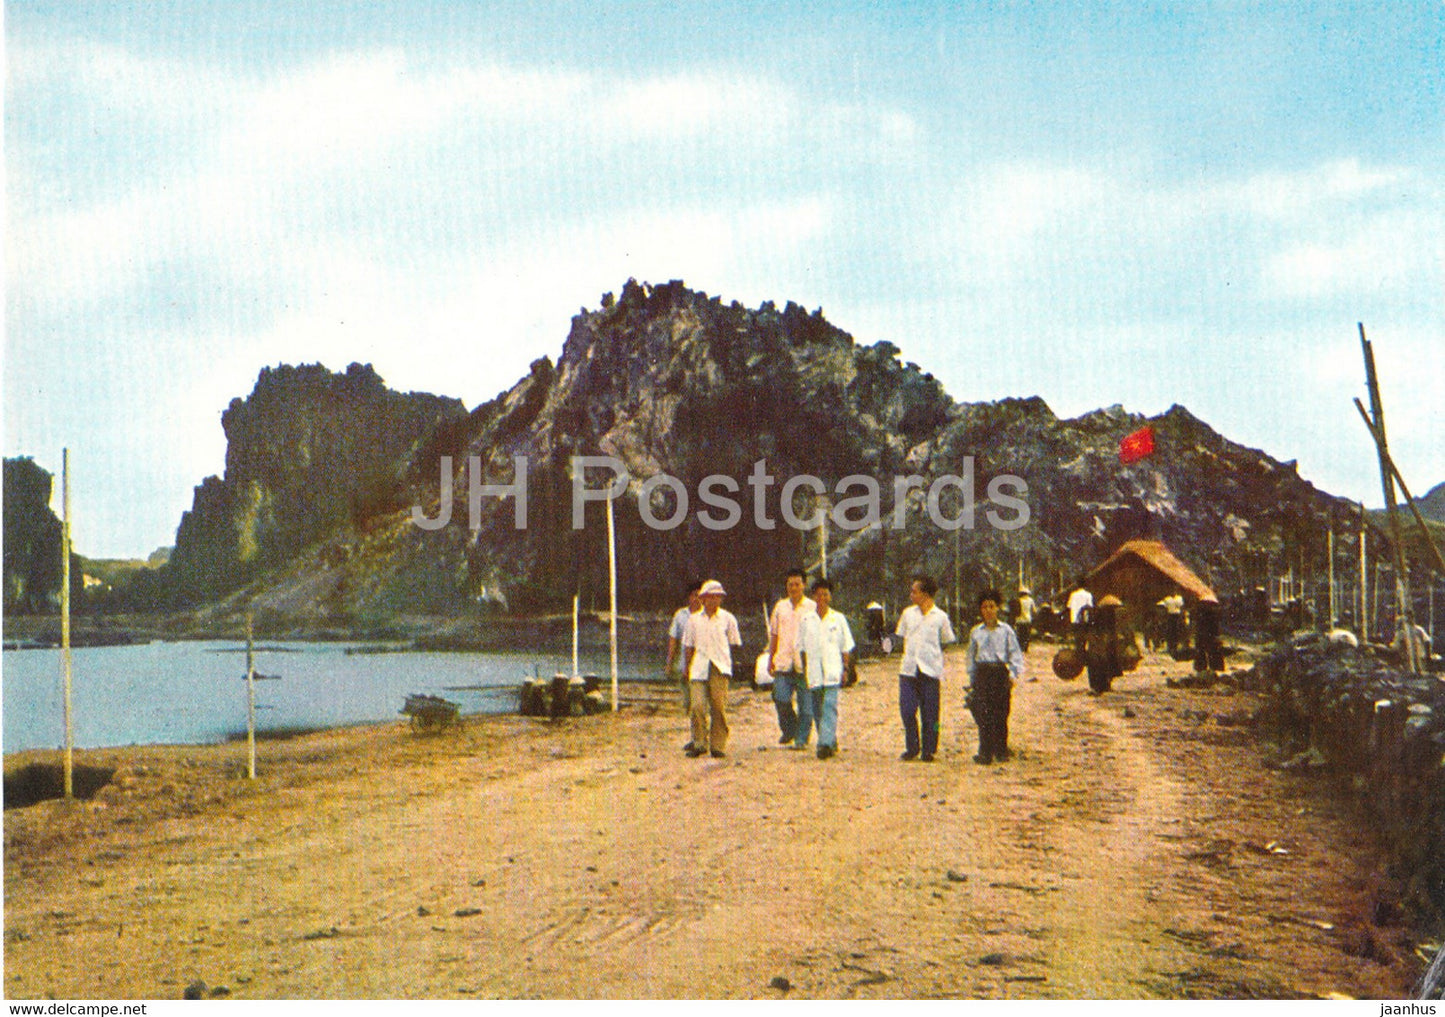 Some Aspects of Vietnam - Haiphong's Dam - Vietnam - unused - JH Postcards